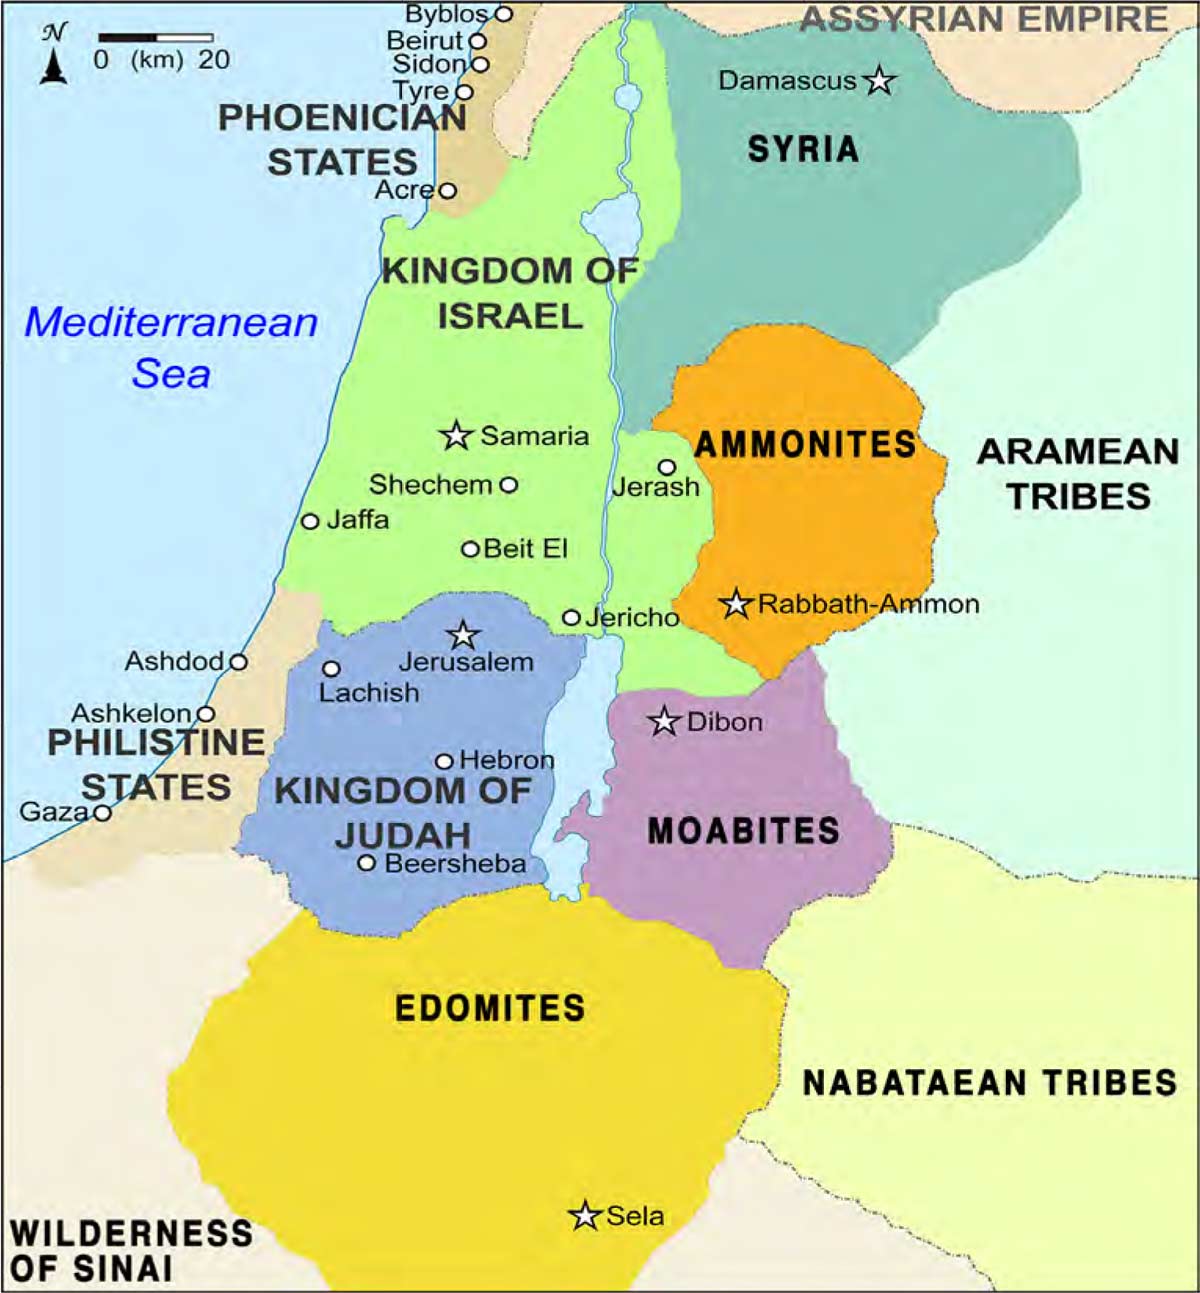 TWO KINGDOMS OF JUDAH AND ISRAEL